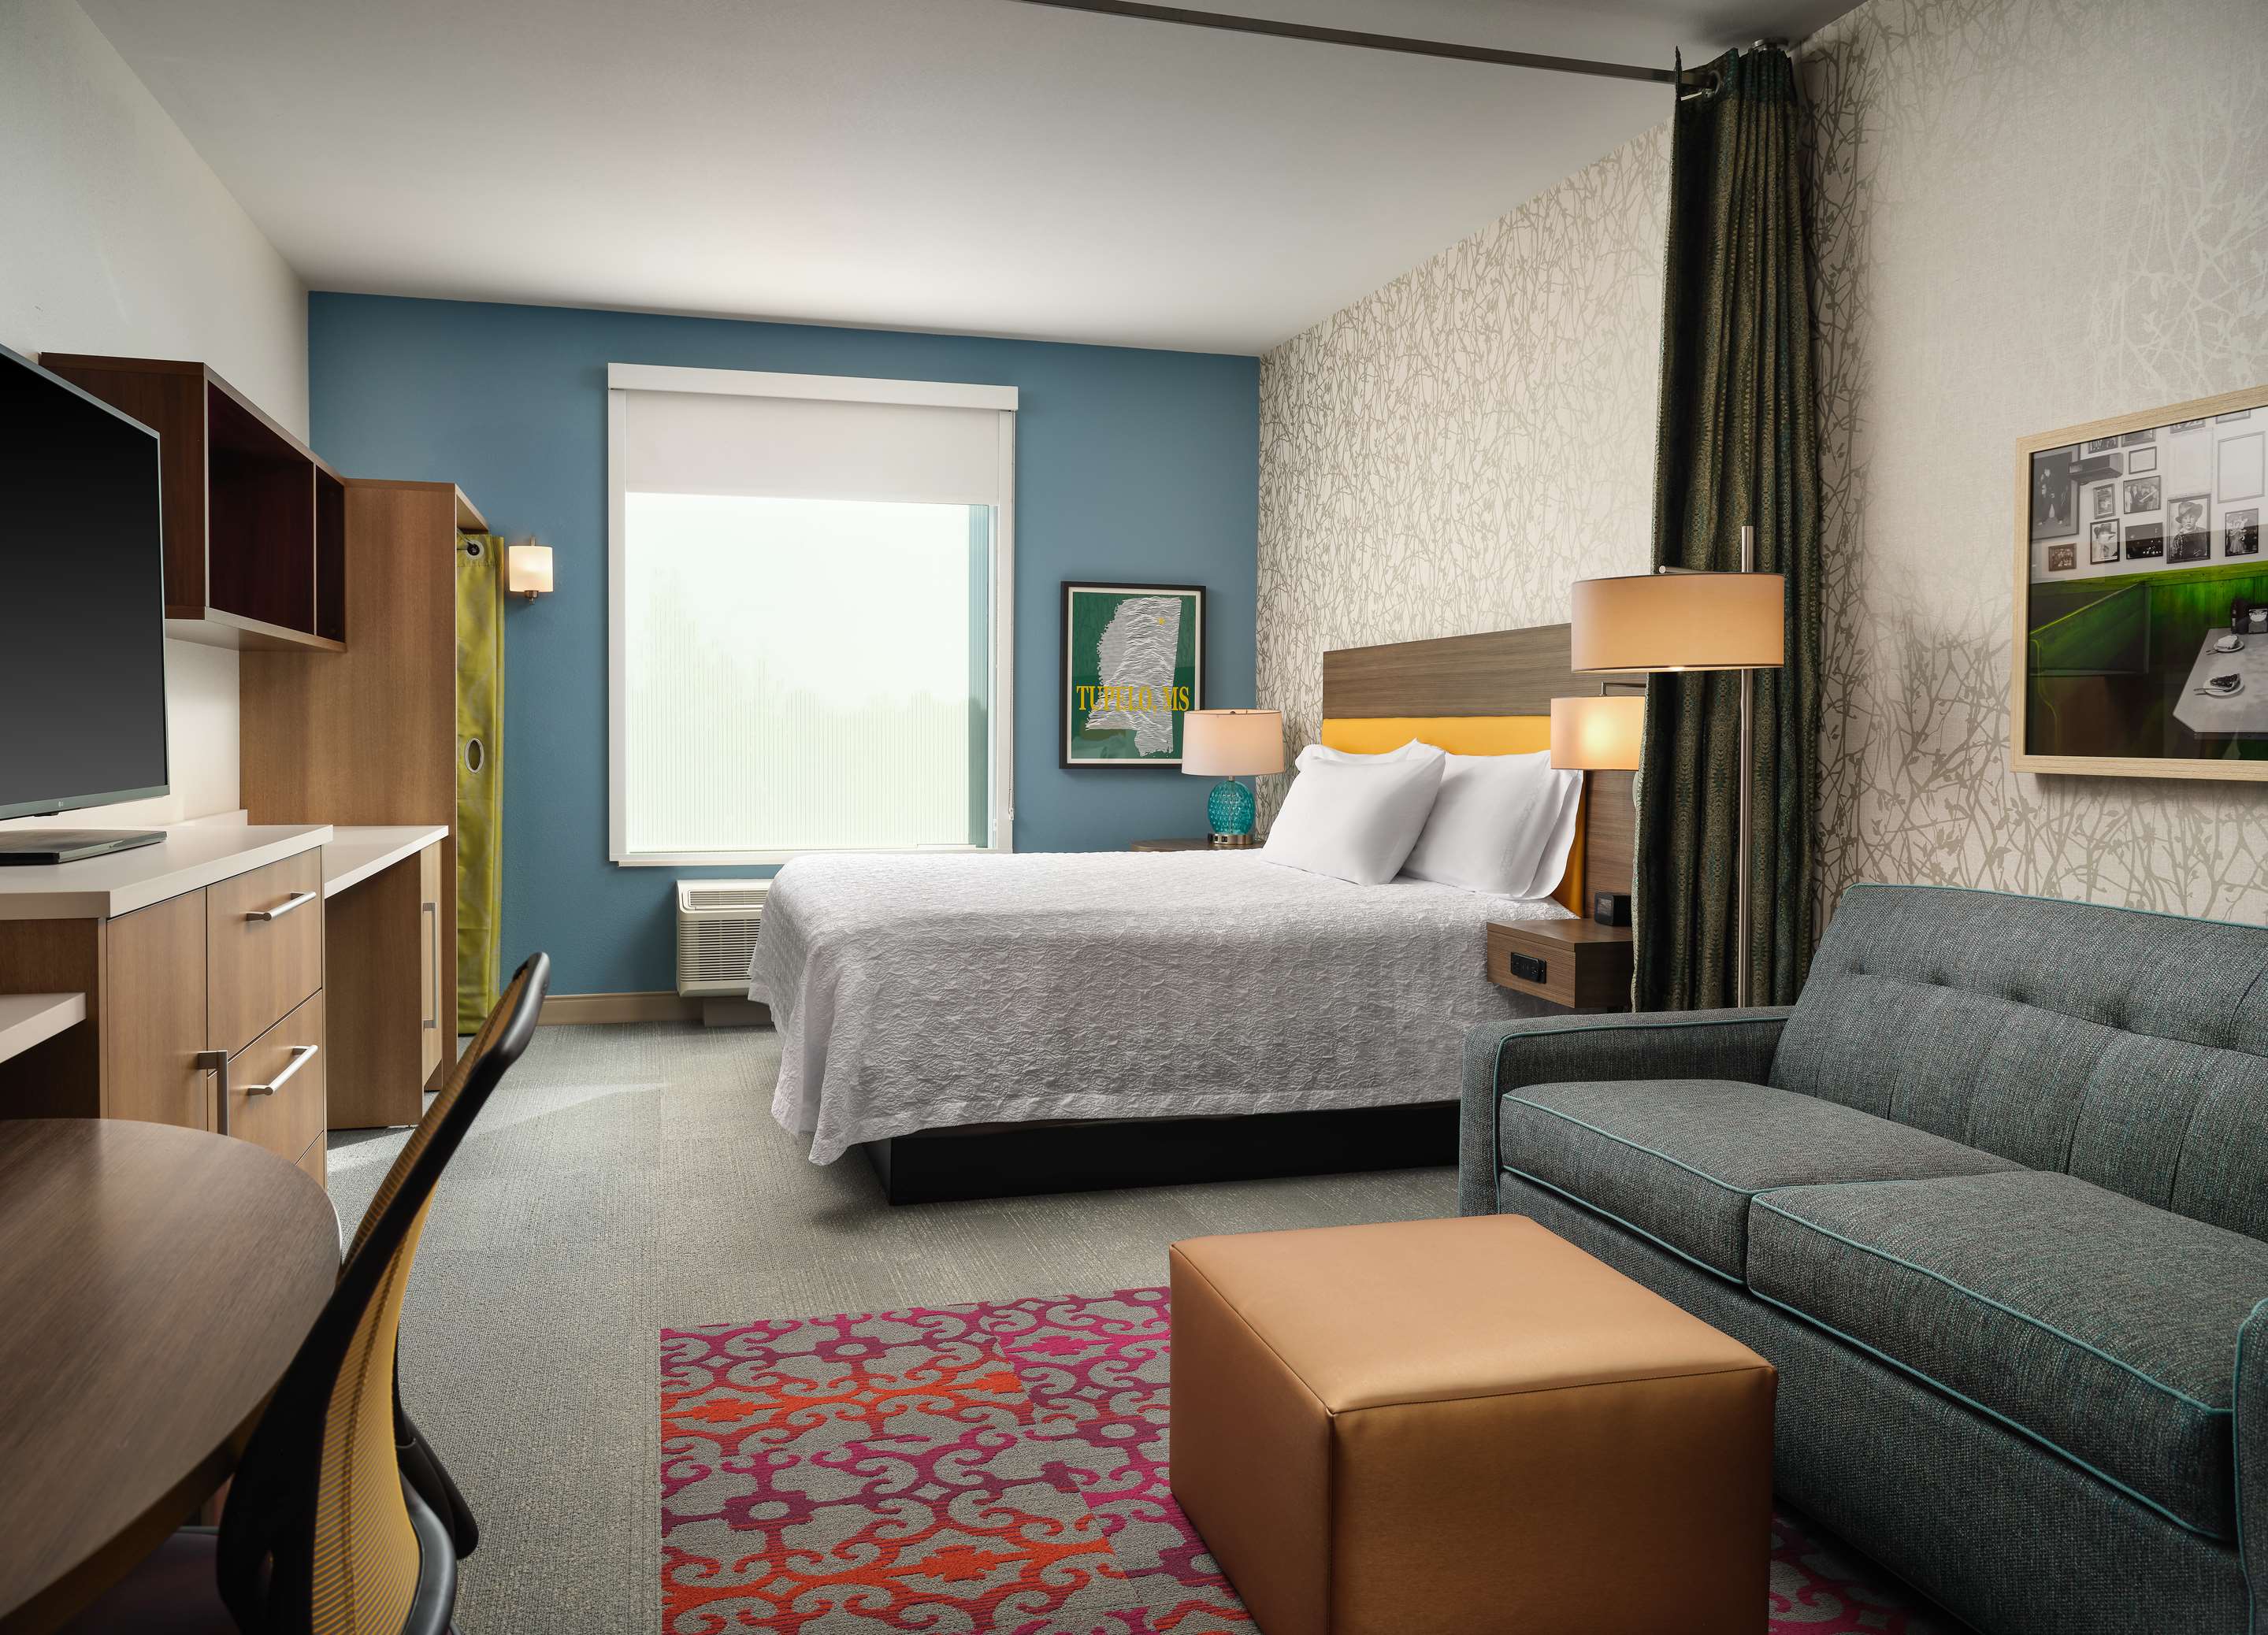 Home2 Suites By Hilton Tupelo, Ms-Tupelo Updated 2022 Room Price-Reviews &  Deals | Trip.com